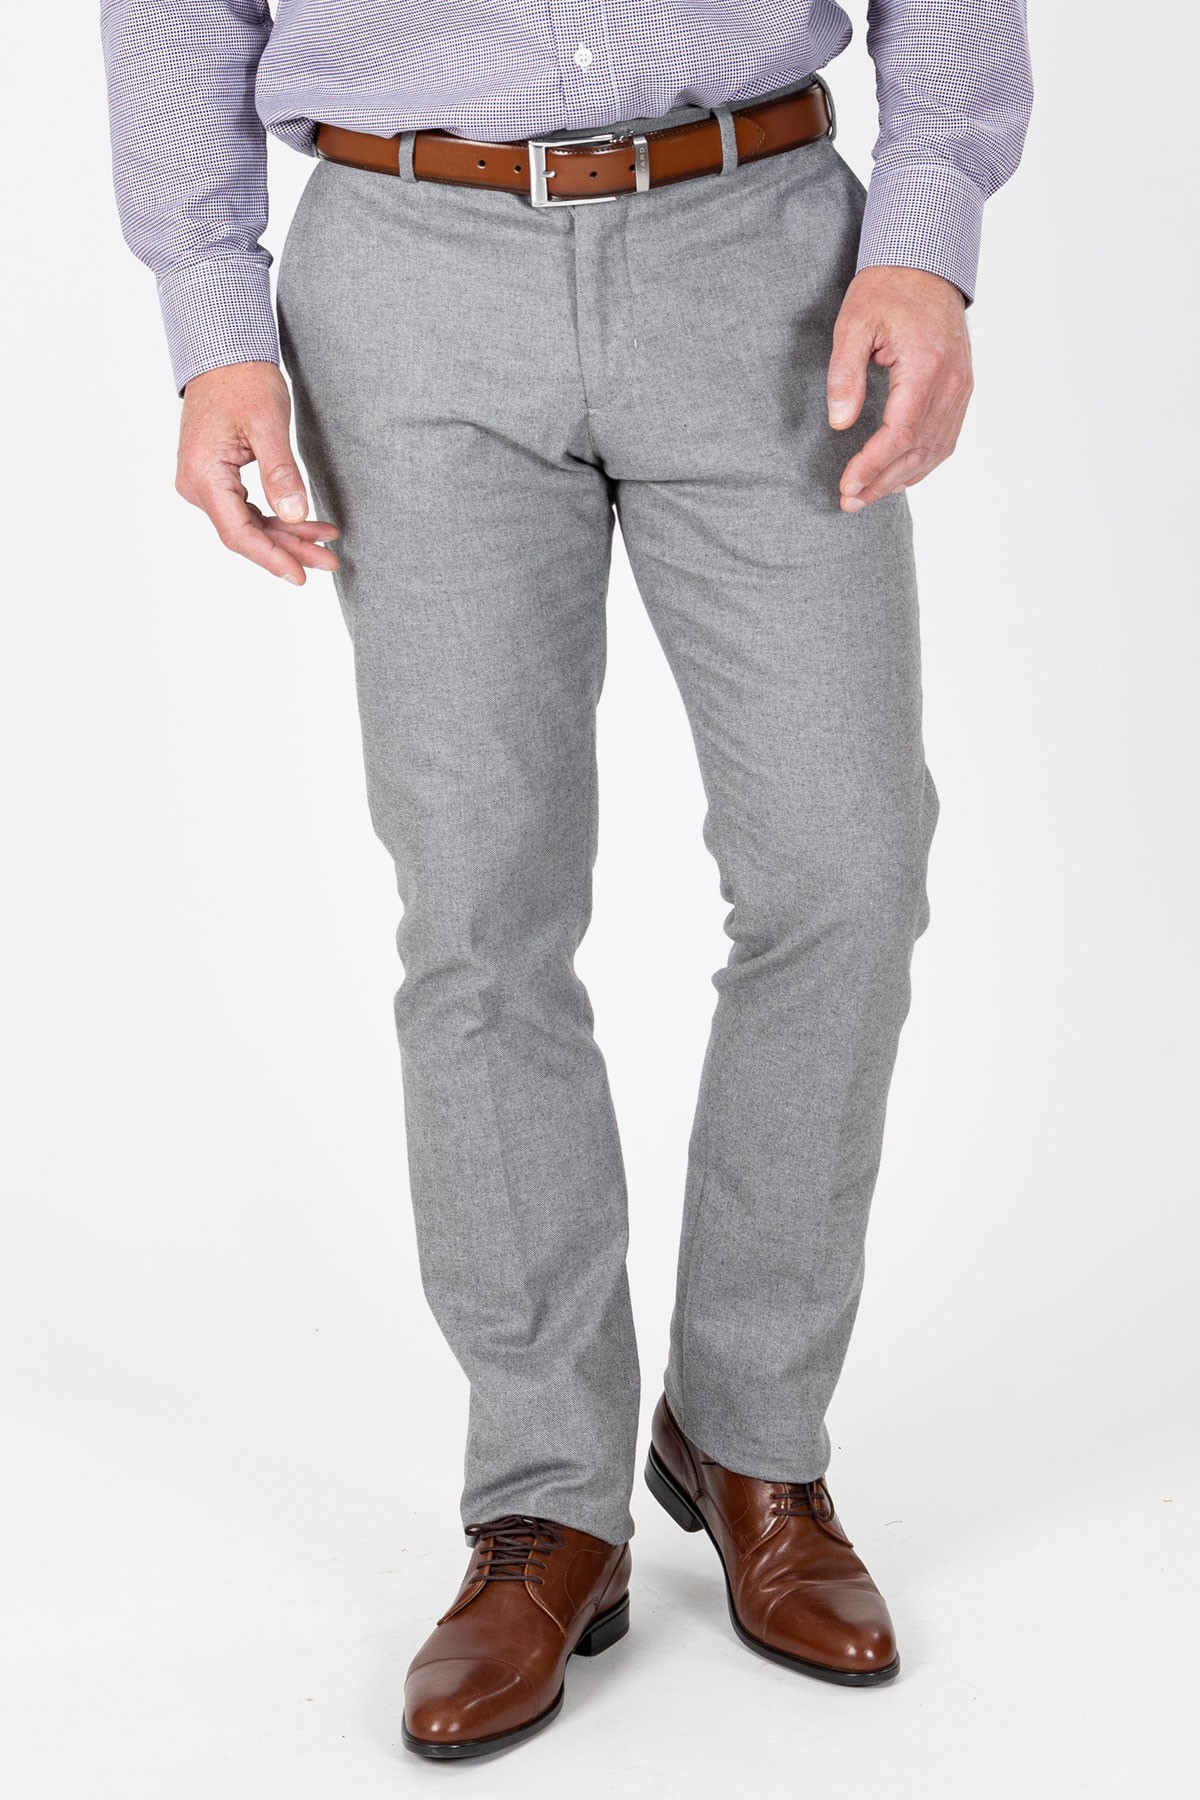 Pantalon gris clair en coton stretch